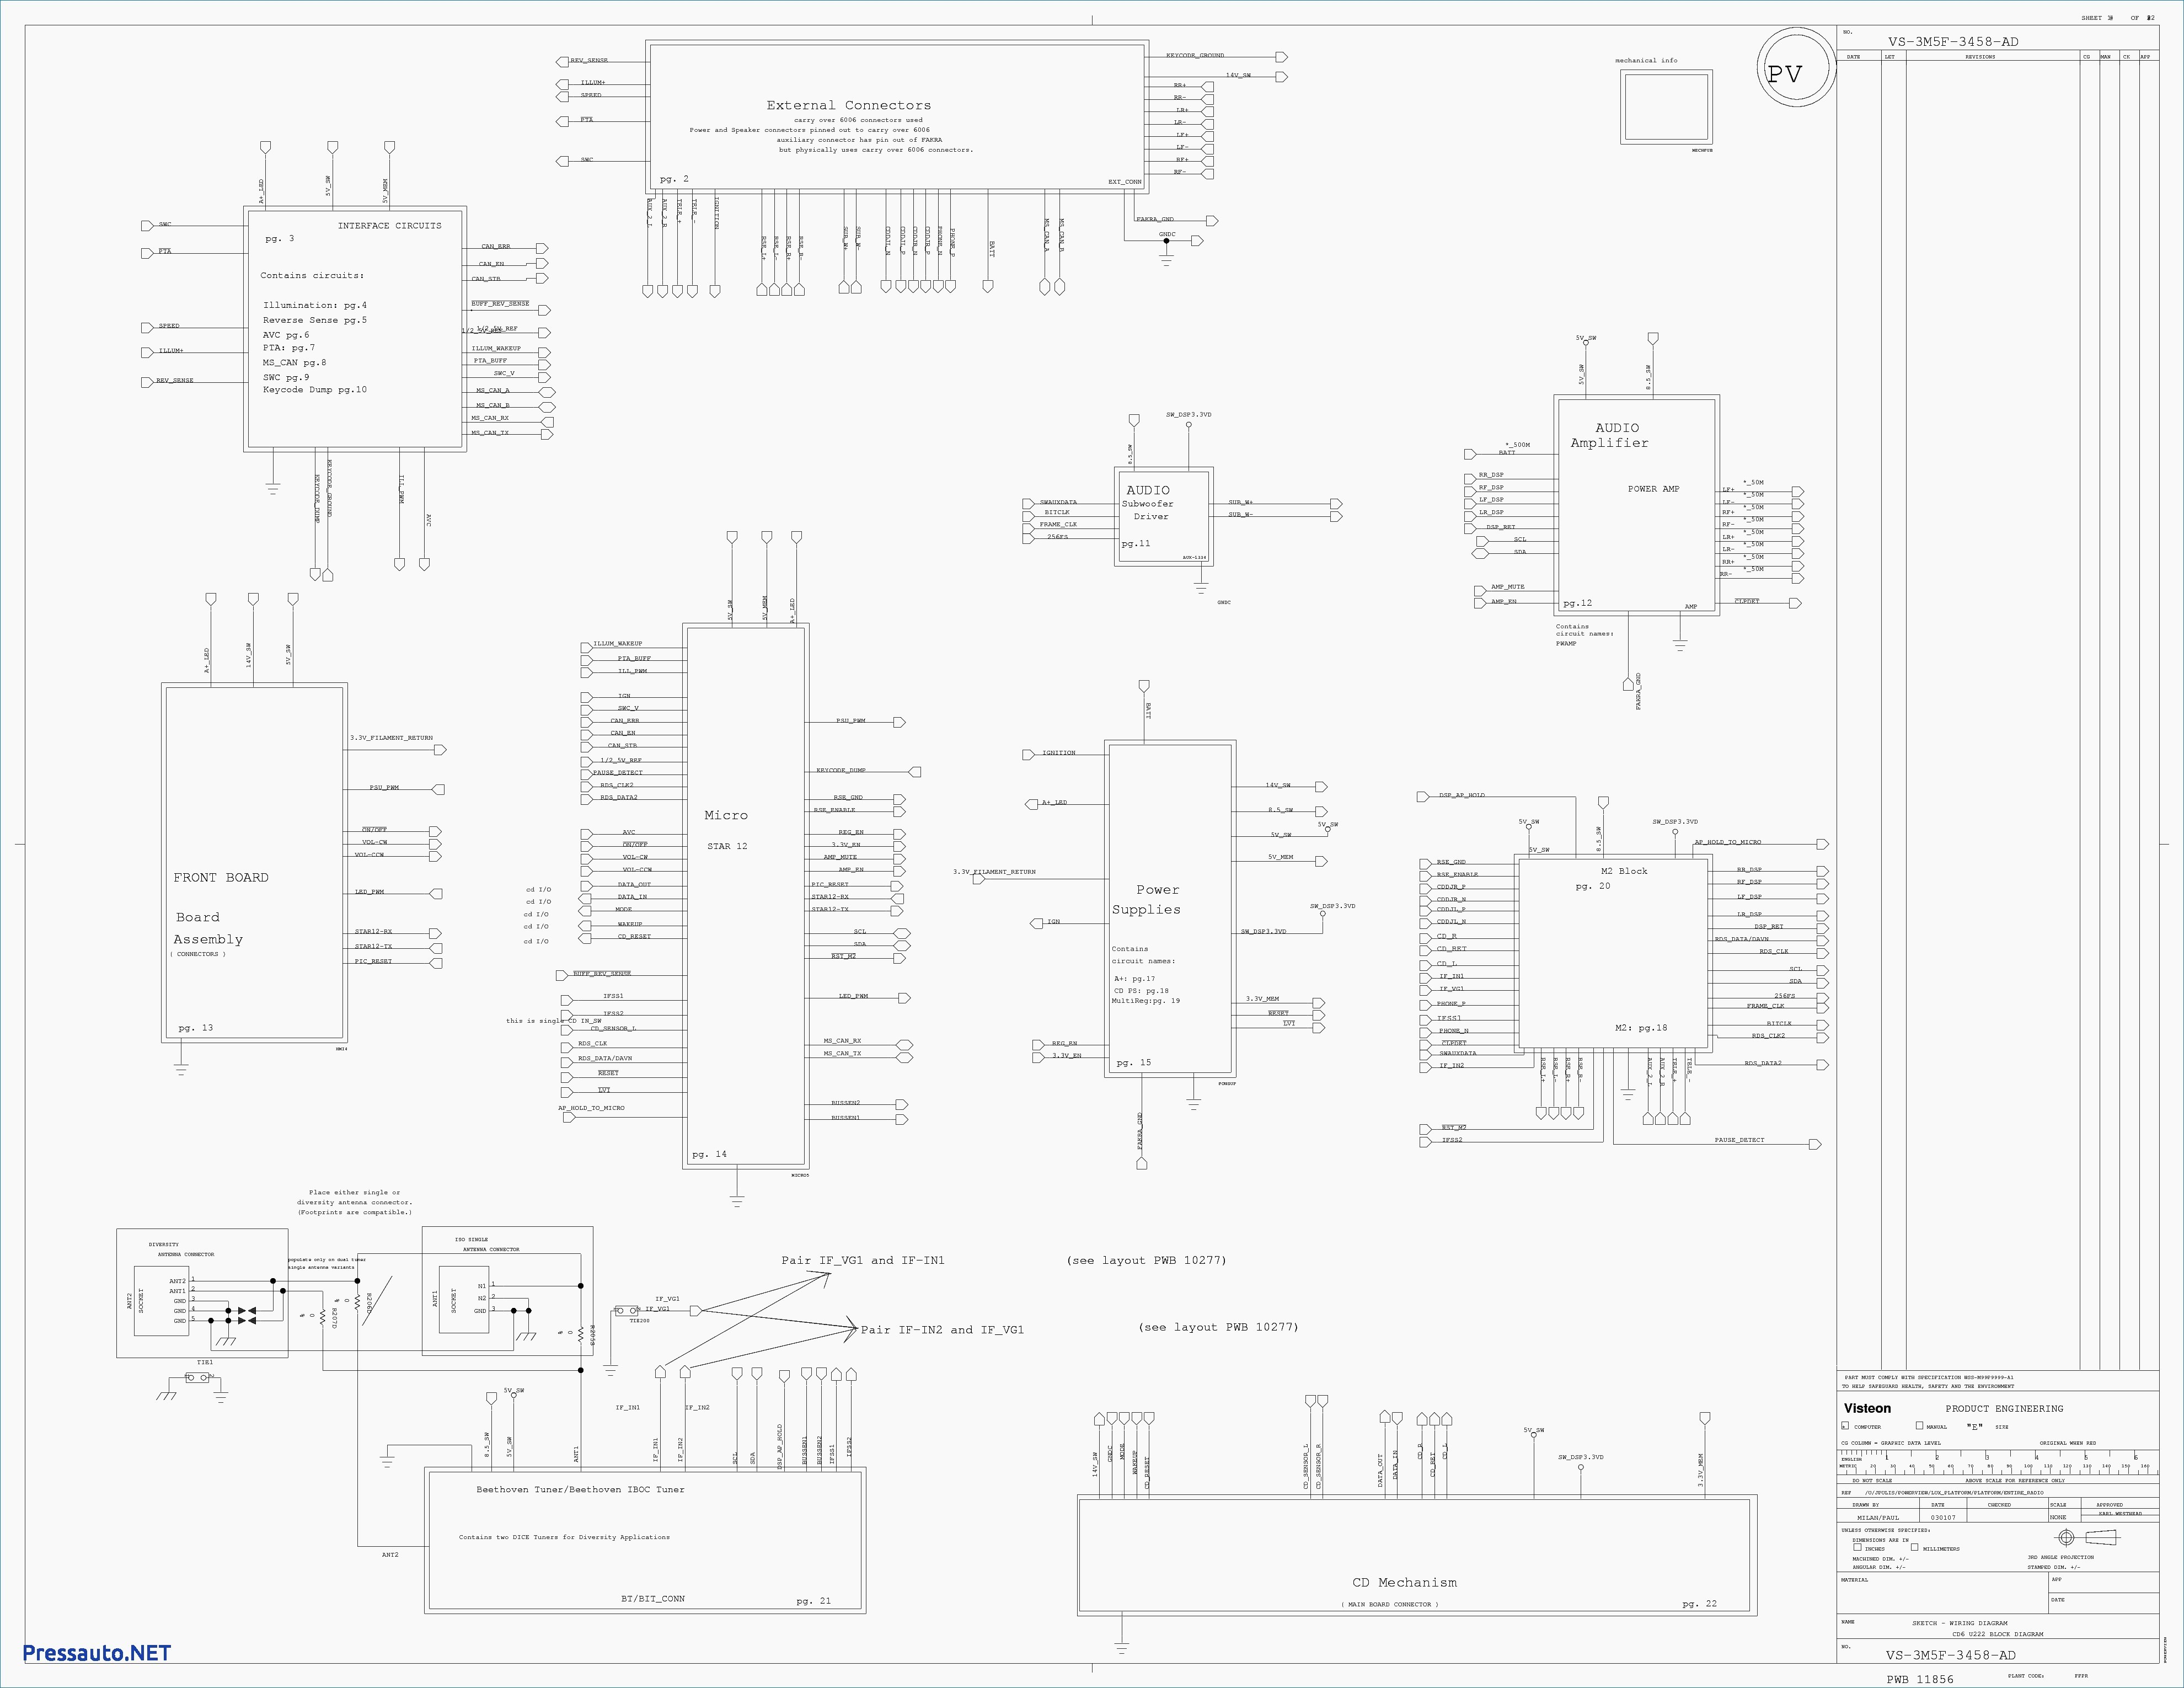 Sony Cdx Gt57up Wiring Diagram sony Xplod Cdx Gt25mpw Wiring Diagram Inside Gt250mp for Gt57up Of Sony Cdx Gt57up Wiring Diagram